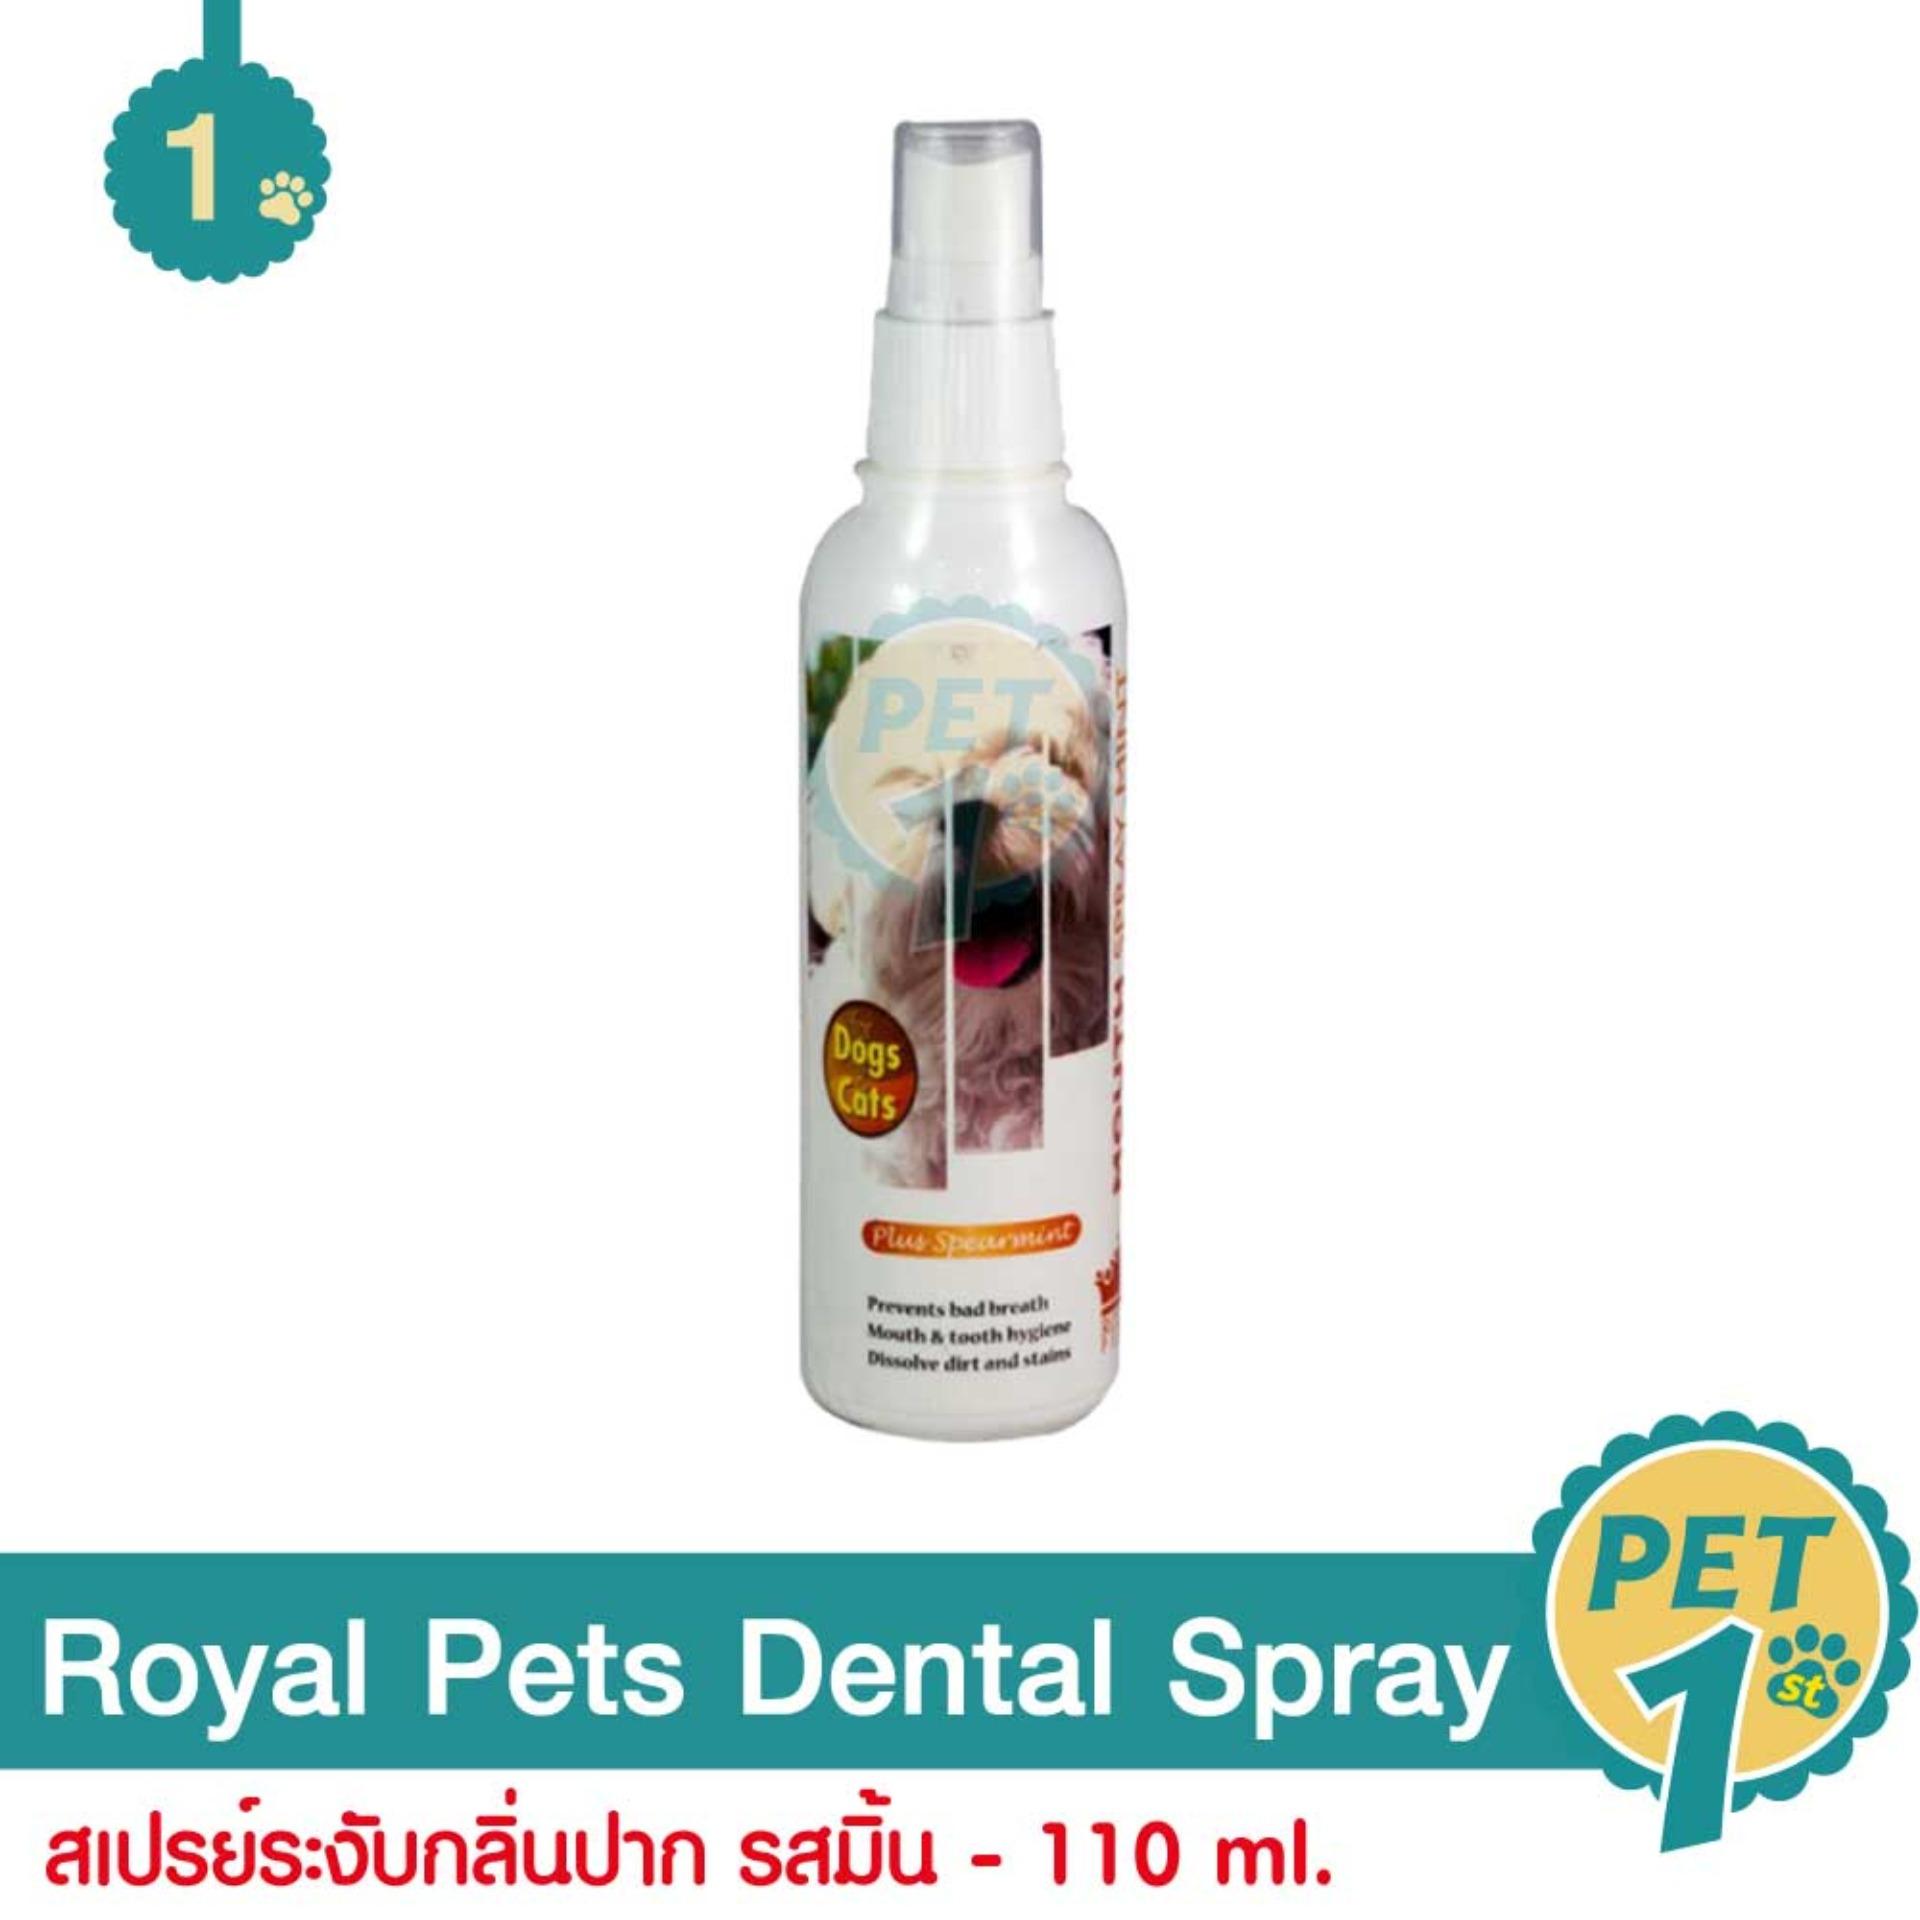 Royal Pets Dental Spray 110 ml. สเปรย์ระงับกลิ่นปาก รสมิ้นท์ สำหรับสุนัขและแมว 110 มล.